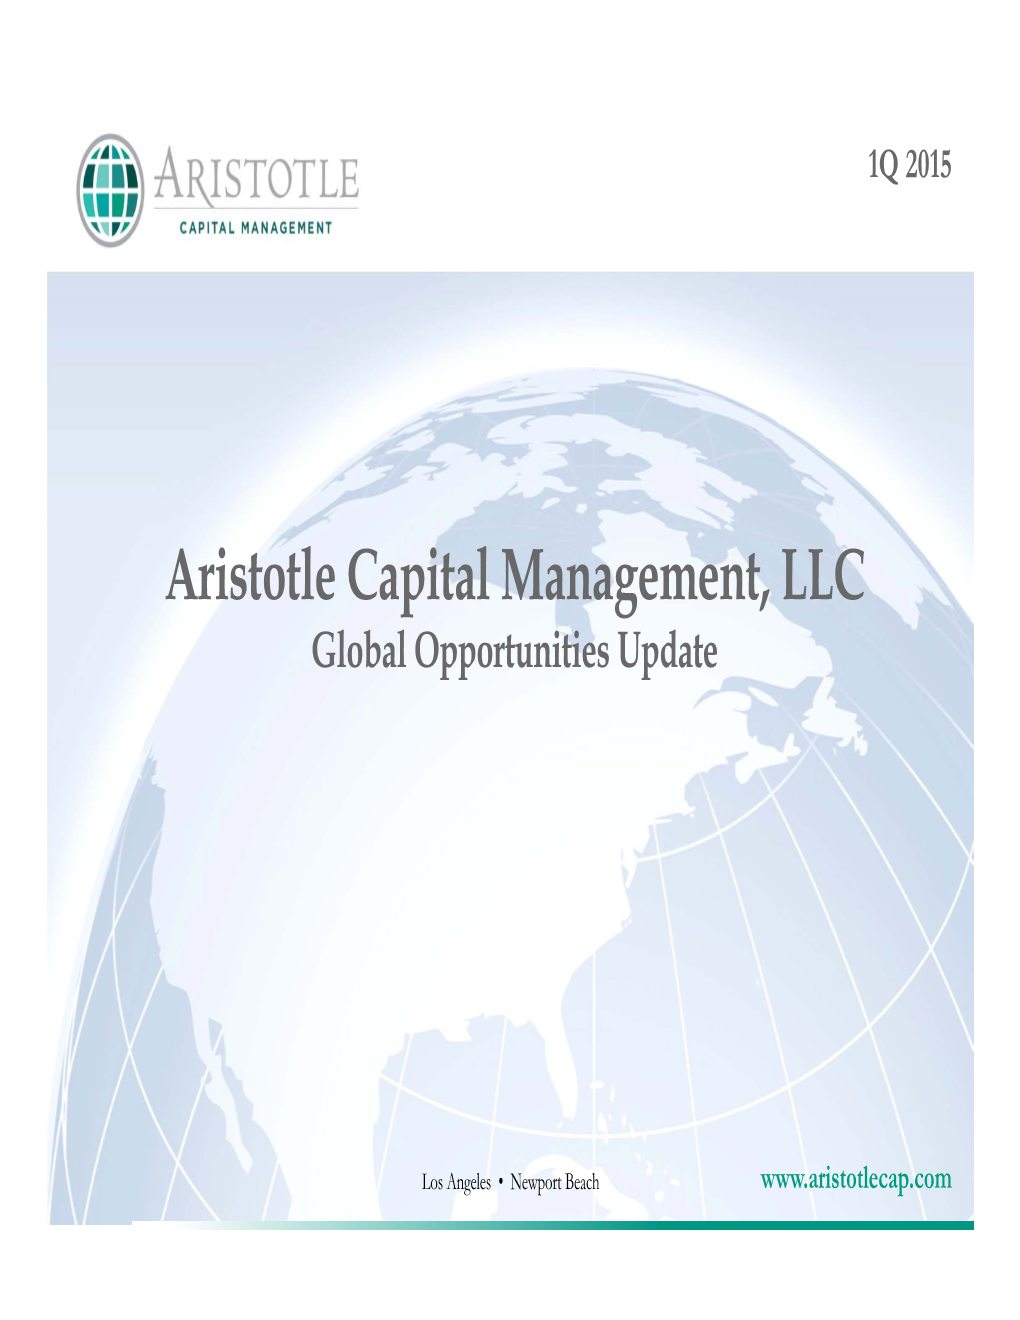 Aristotle Capital Management, LLC Global Opportunities Update